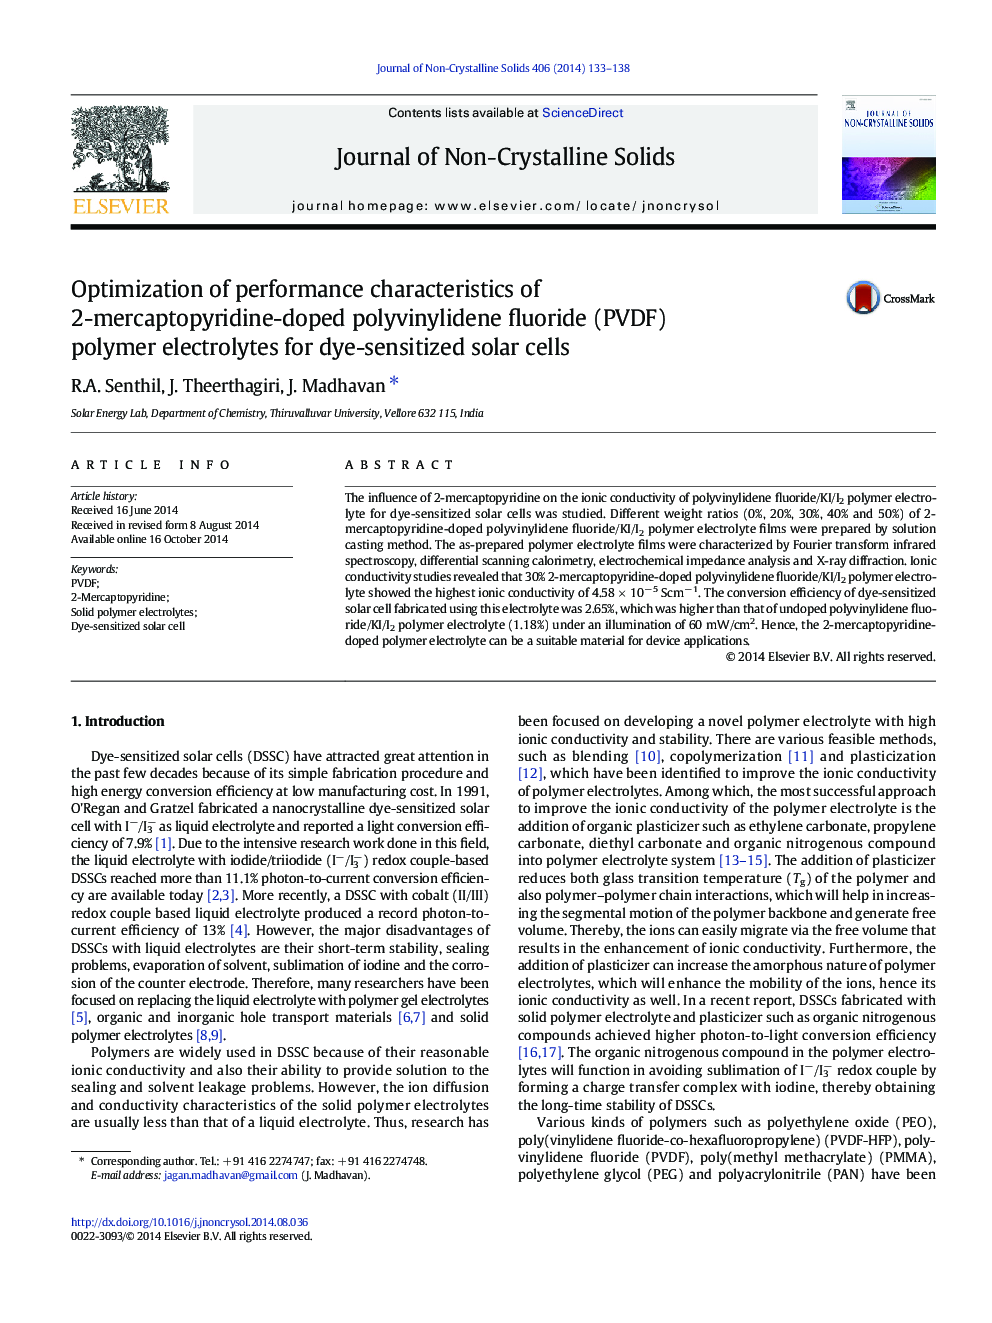 Optimization of performance characteristics of 2-mercaptopyridine-doped polyvinylidene fluoride (PVDF) polymer electrolytes for dye-sensitized solar cells